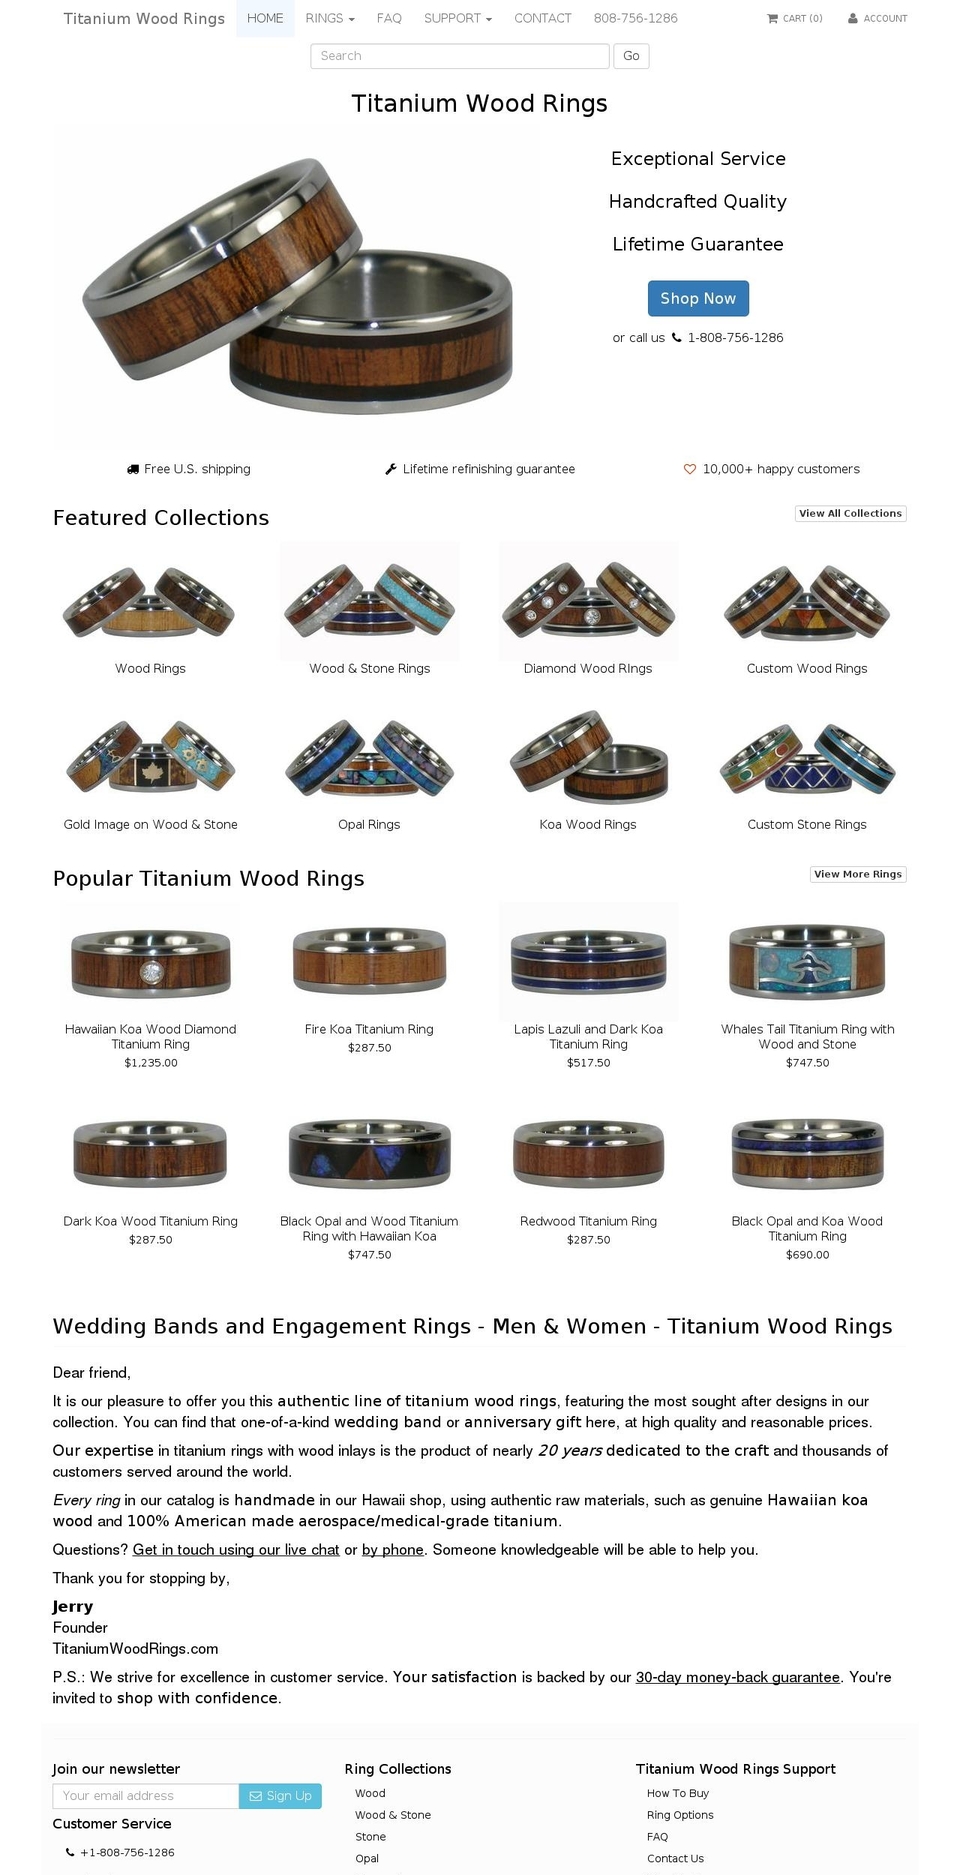 Titanium Wood Rings twr-310v1 Shopify theme site example titaniumwoodrings.com